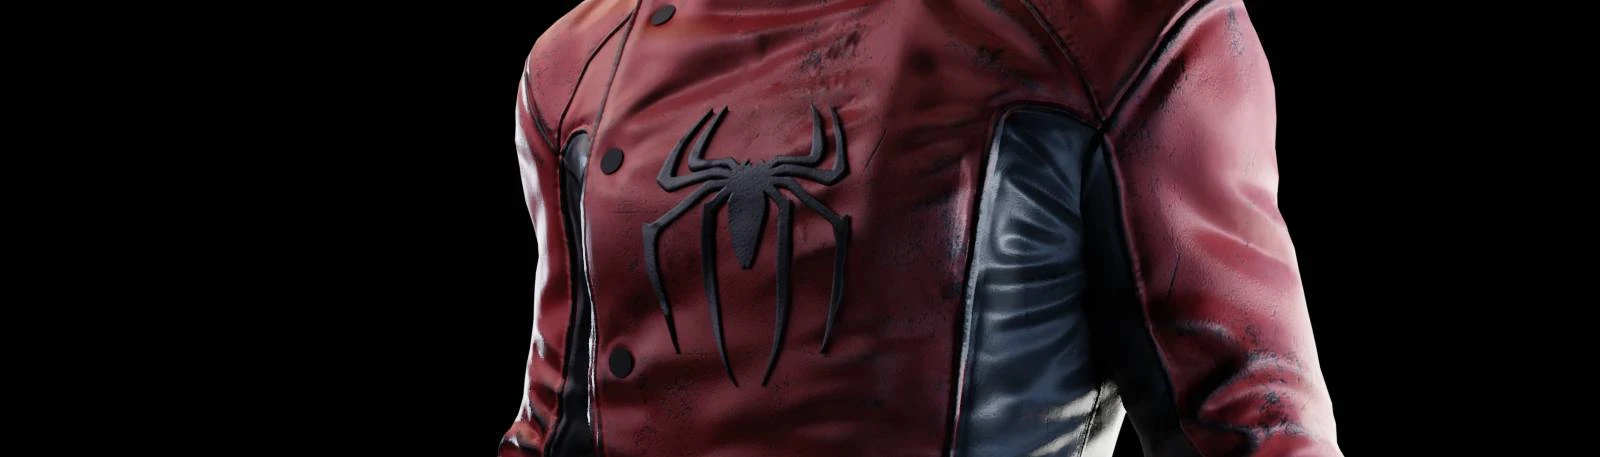 Download Tobey Maguire In Spider Man Jacket Wallpaper